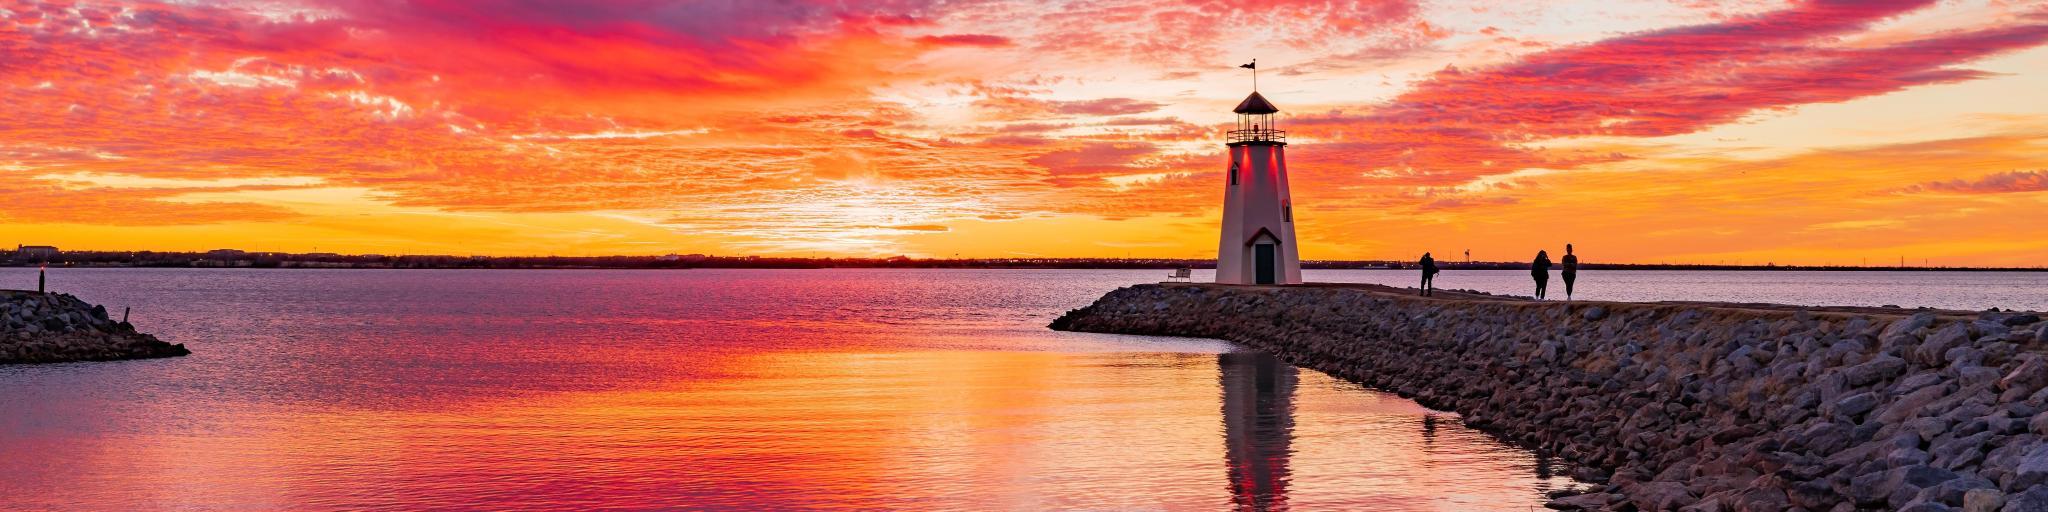 Sunset beautiful afterglow over the lighthouse of Lake Hefner, Oklahoma City, Oklahoma, USA.